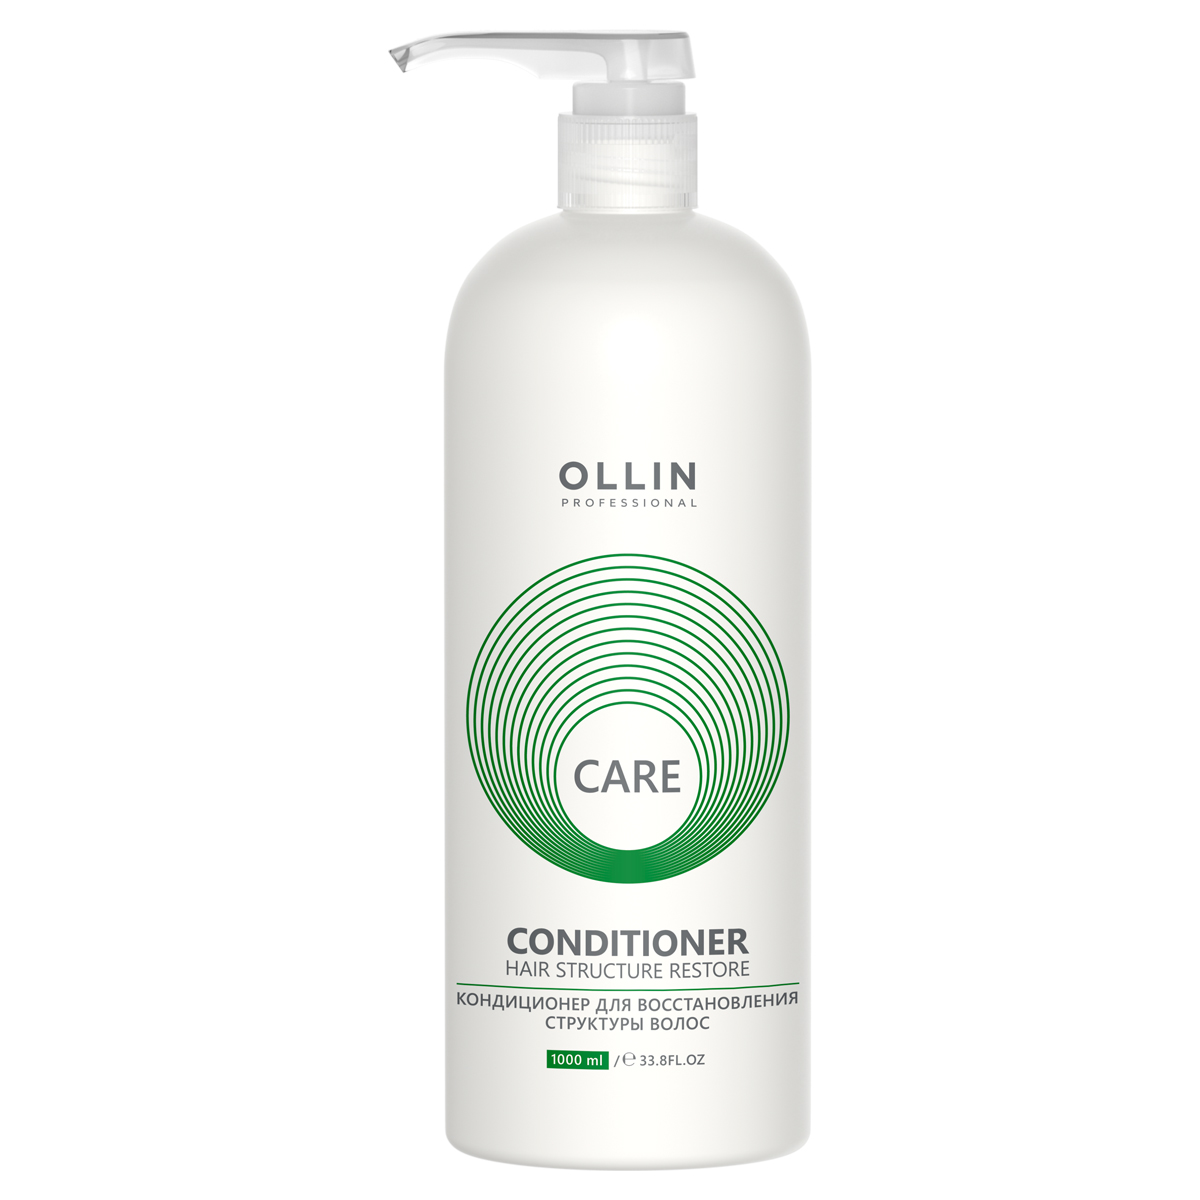 Ollin Professional Кондиционер для восстановления структуры волос, 1000 мл (Ollin Professional, Care)